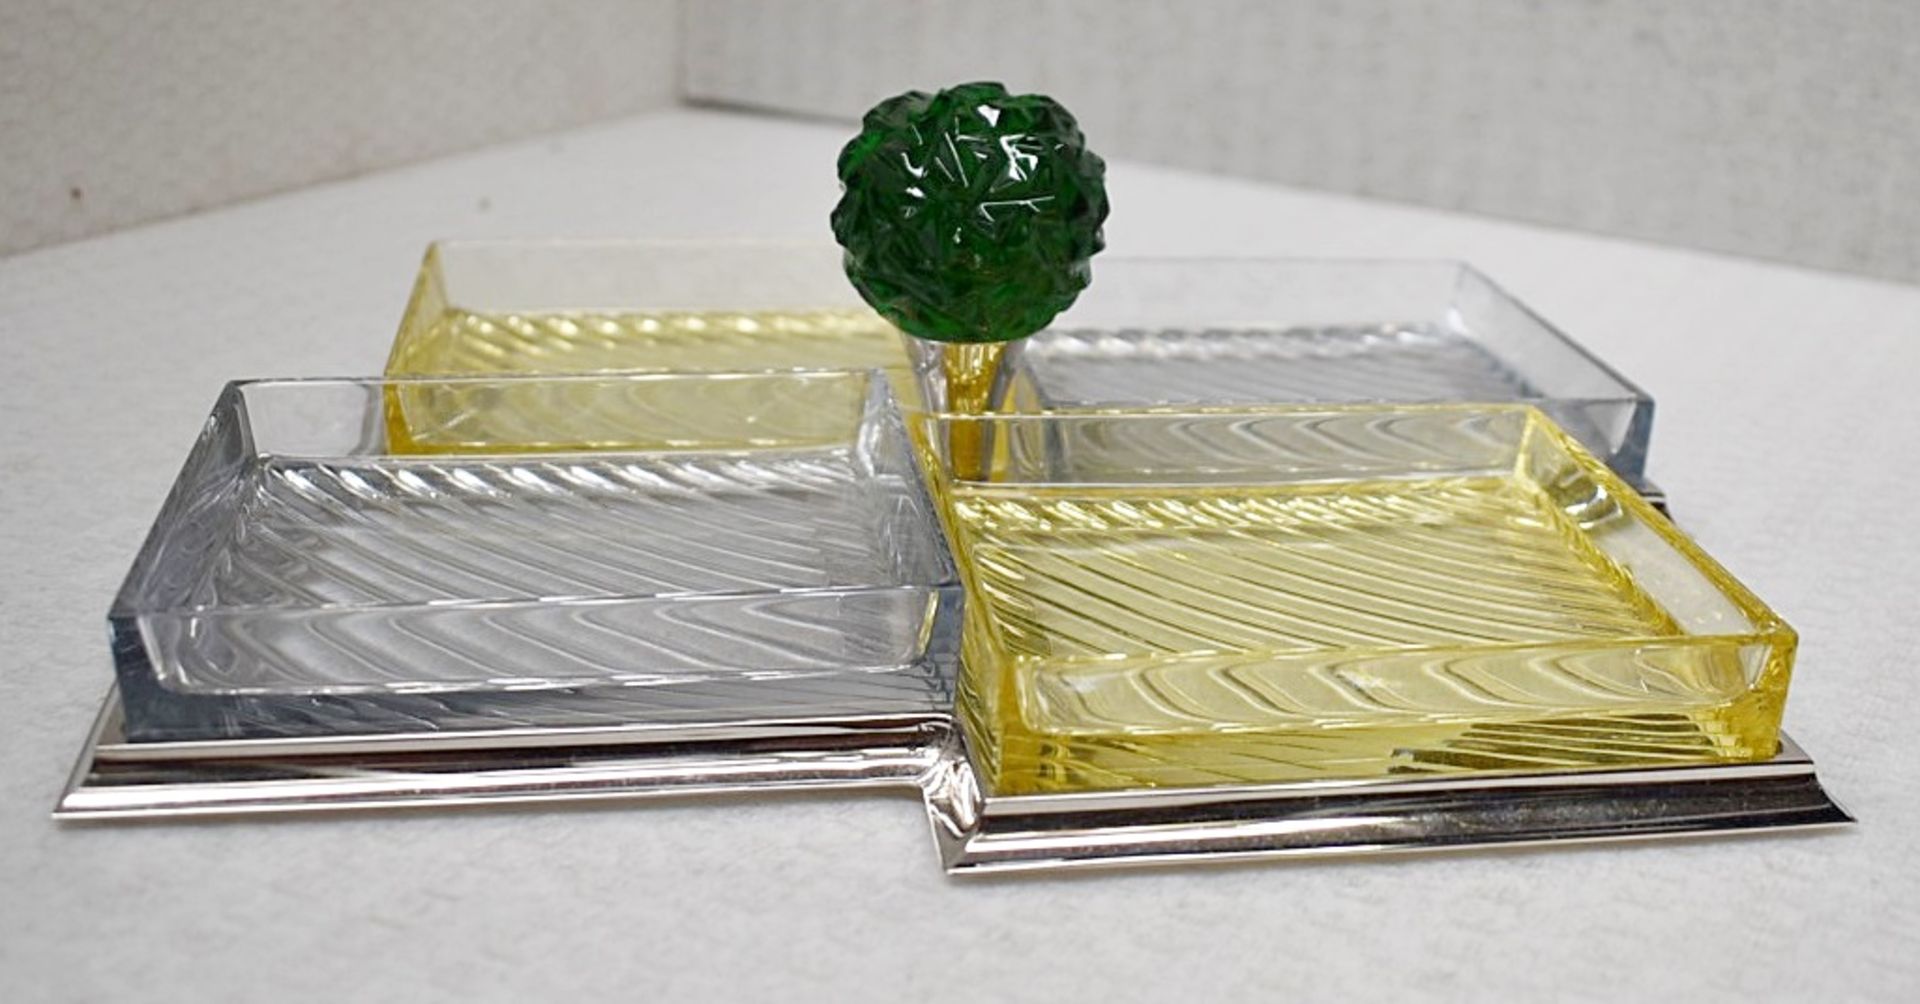 1 x BALDI 'Home Jewels' Italian Hand-crafted Artisan Glass 4-Dish Serving Tray - Original RRP £2,355 - Image 3 of 4